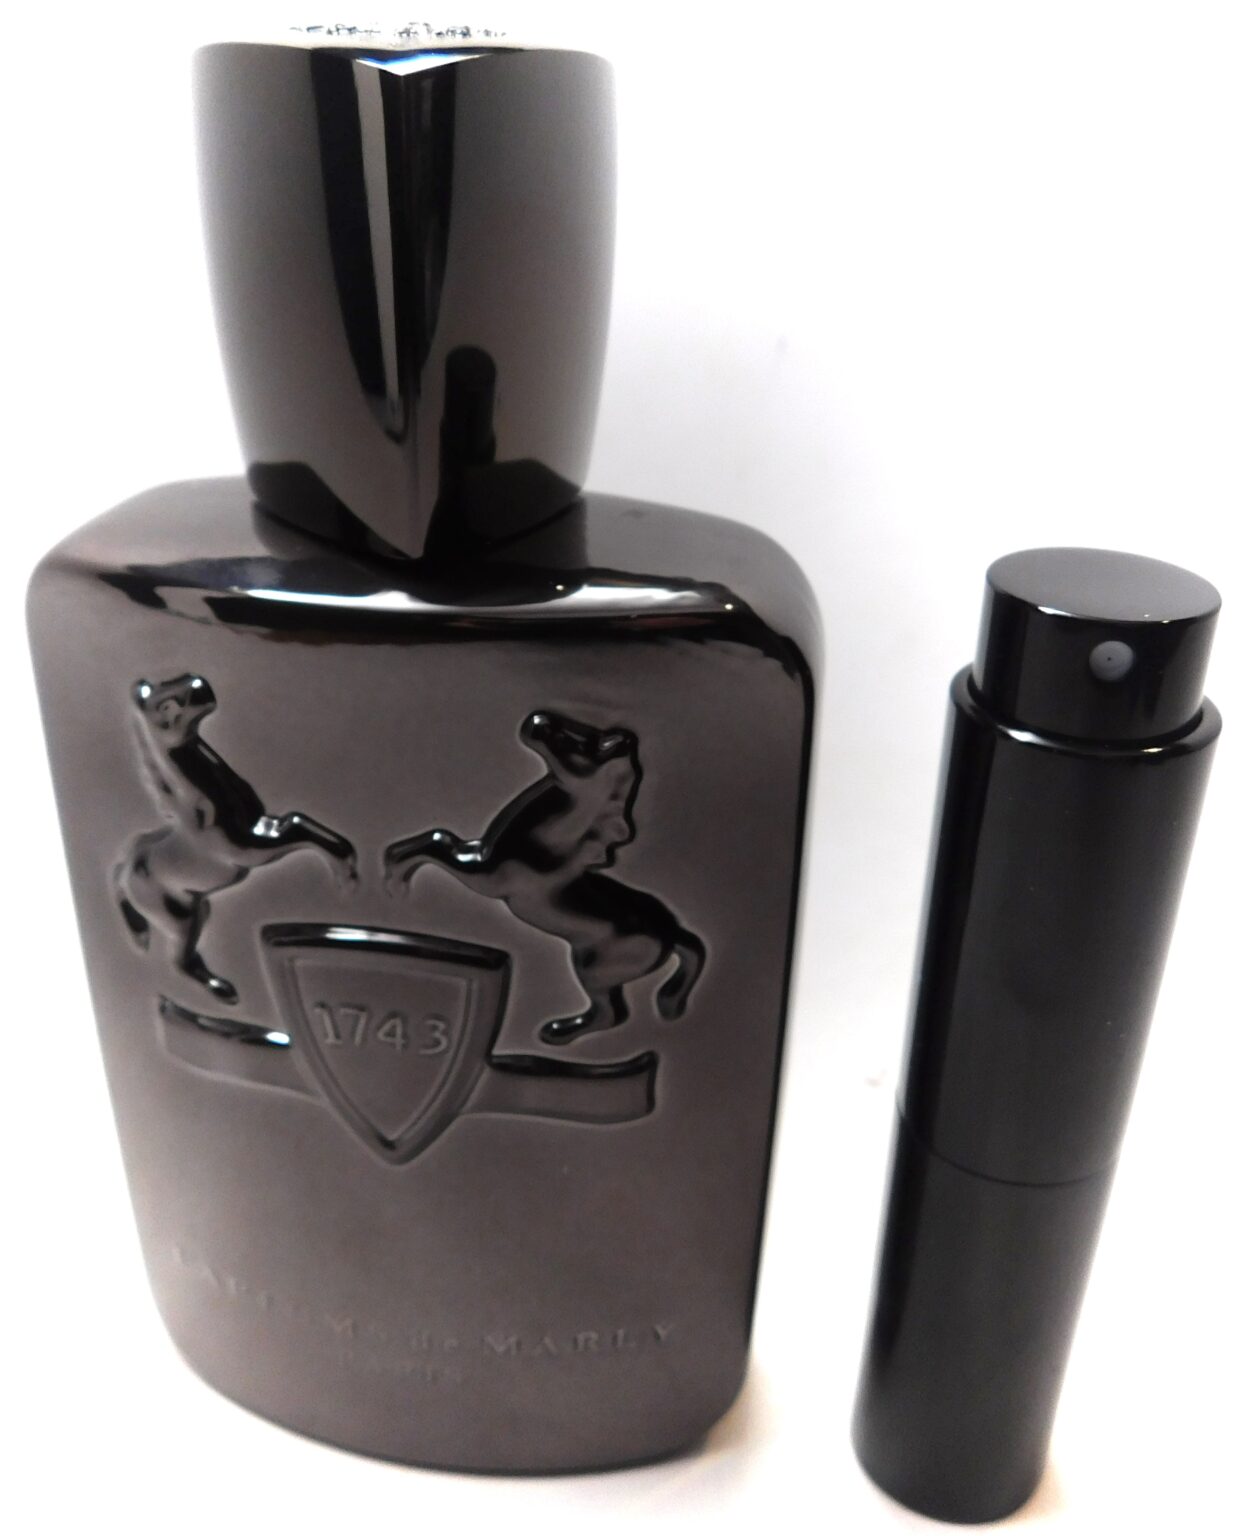 PARFUMS DE MARLY HEROD 8ml travel atomizer Parfum Beast Mode Compliments Cologne